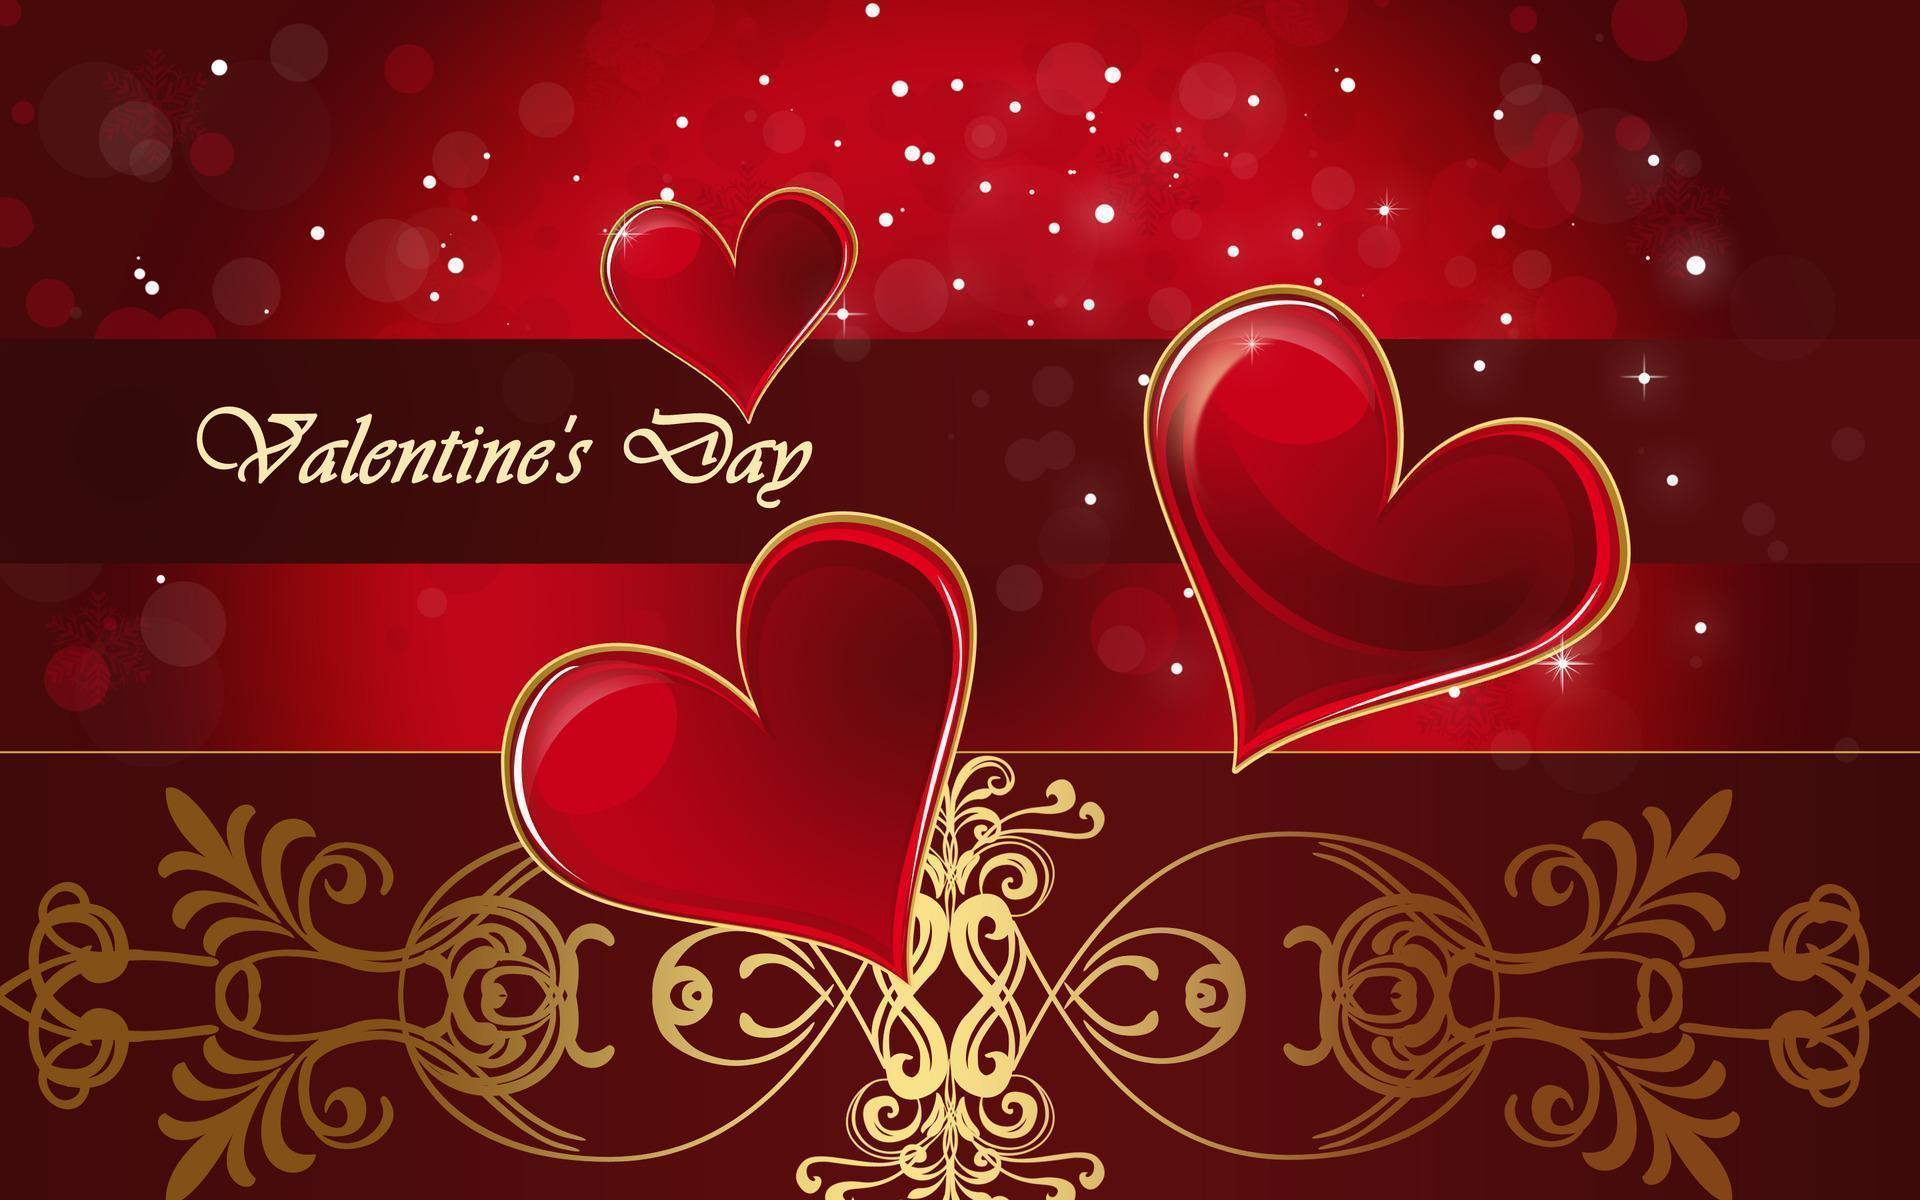 Happy Valentines Day Hearts Wallpaper, Image, Pics, photo